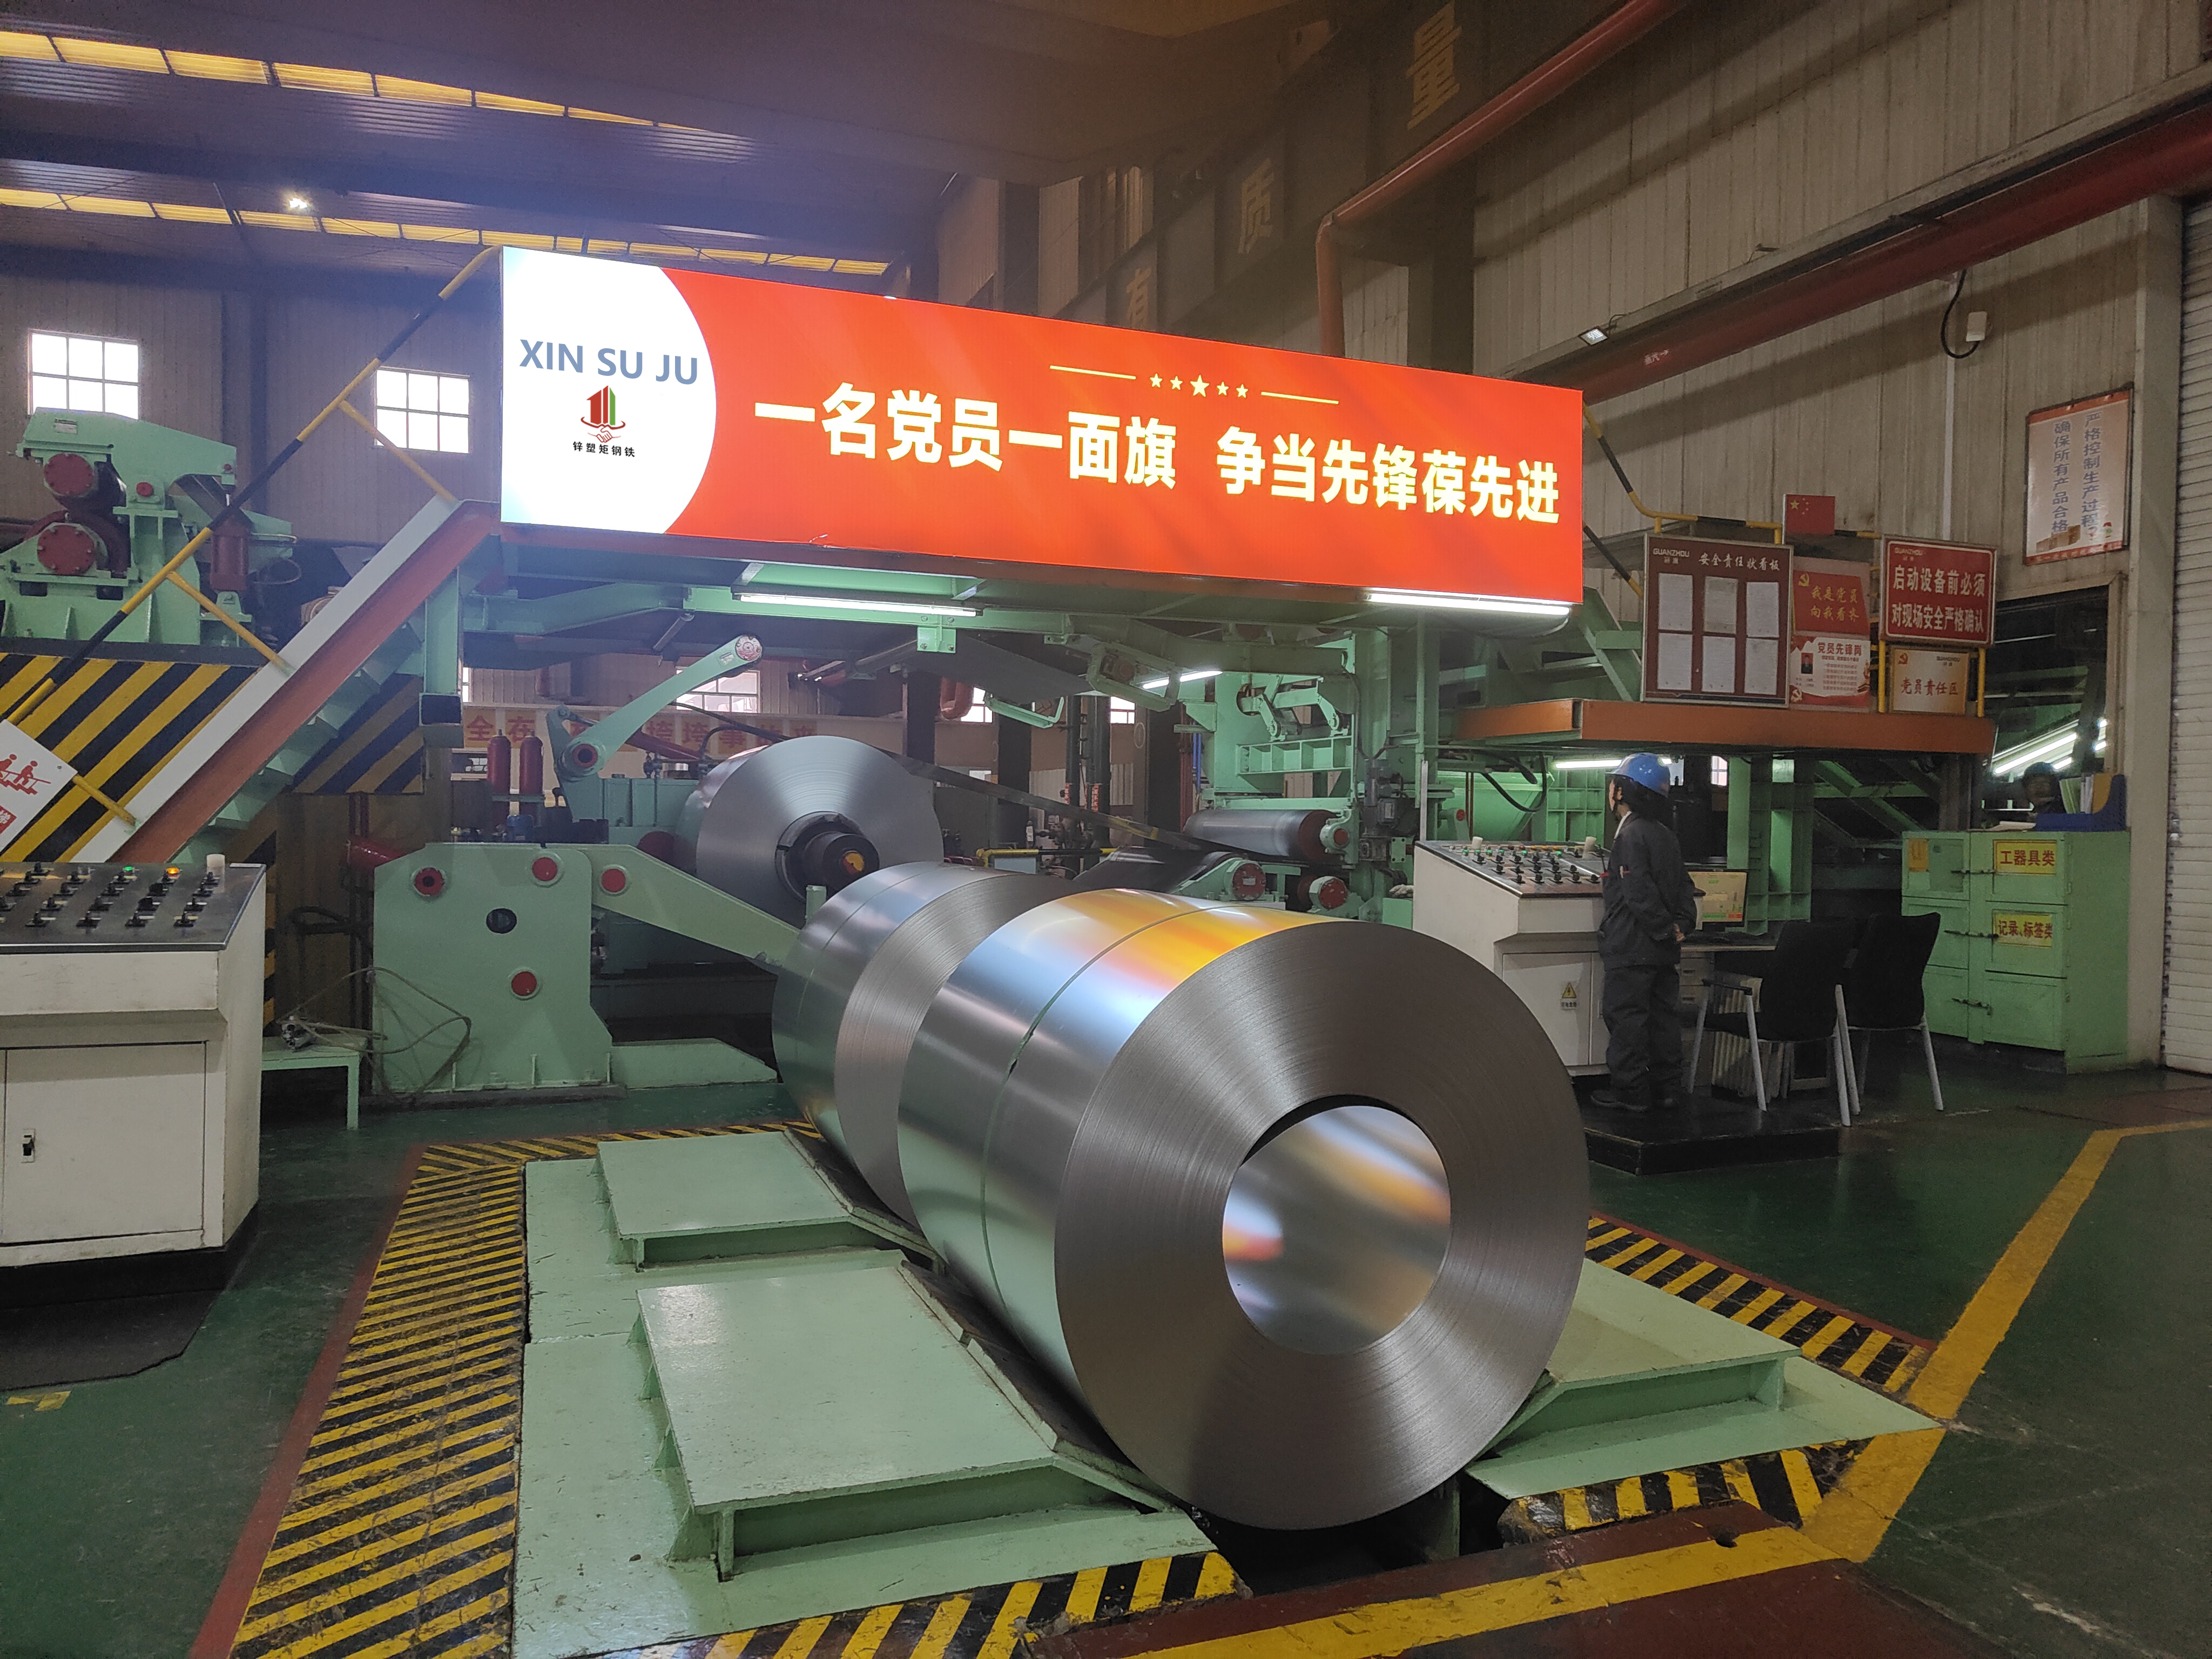 Shandong Xinsuju Steel Co.,Ltd.